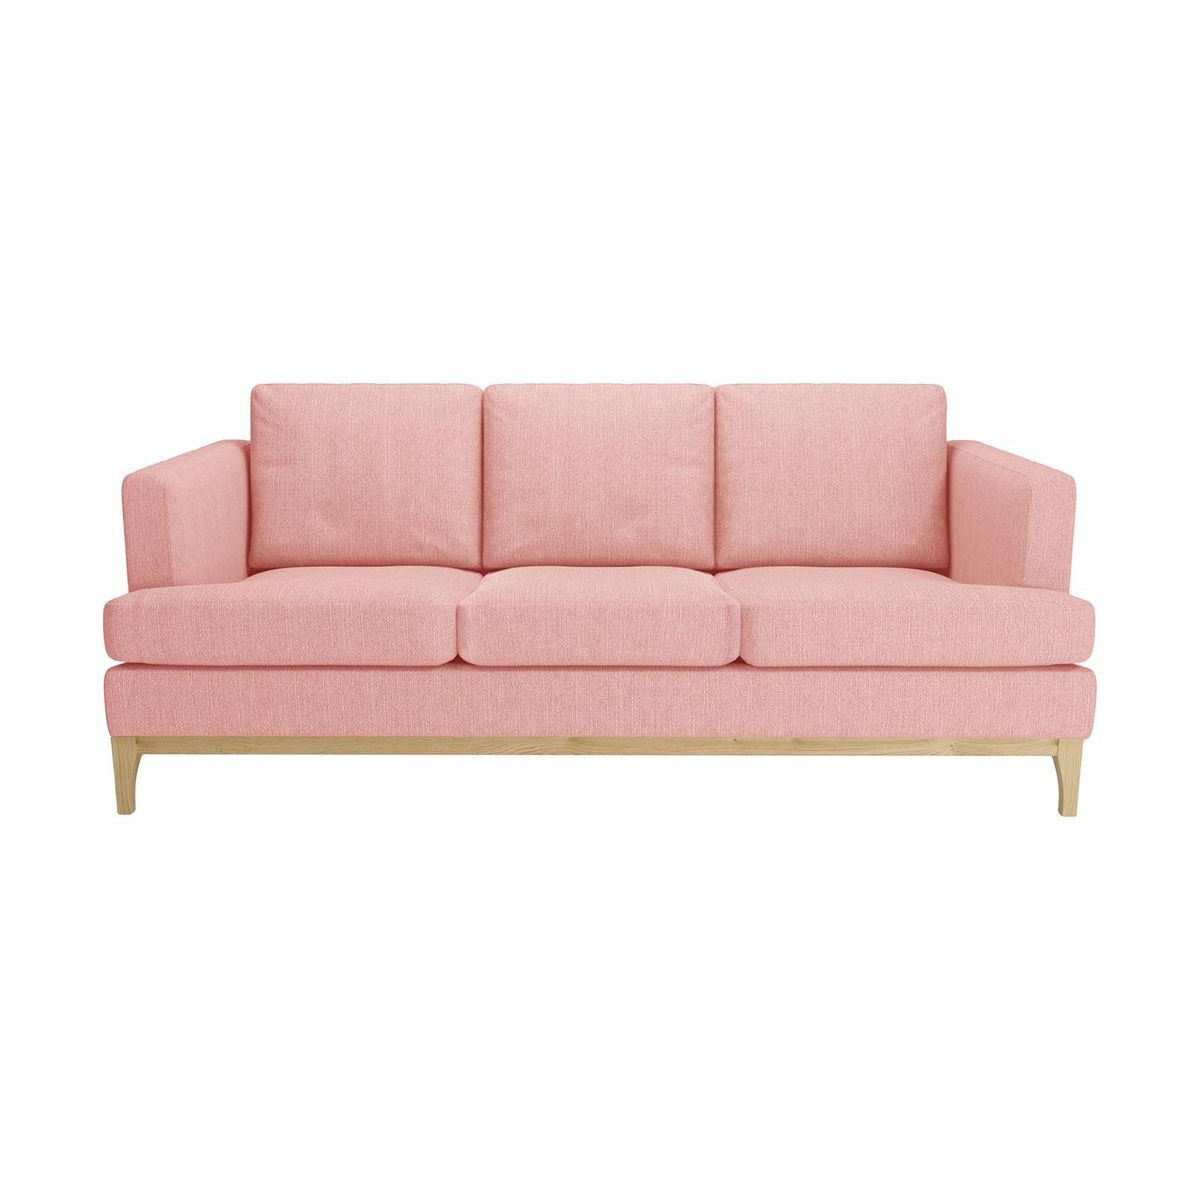 Scarlett Structured 3 Seater Sofa, pink, Leg colour: like oak - image 1